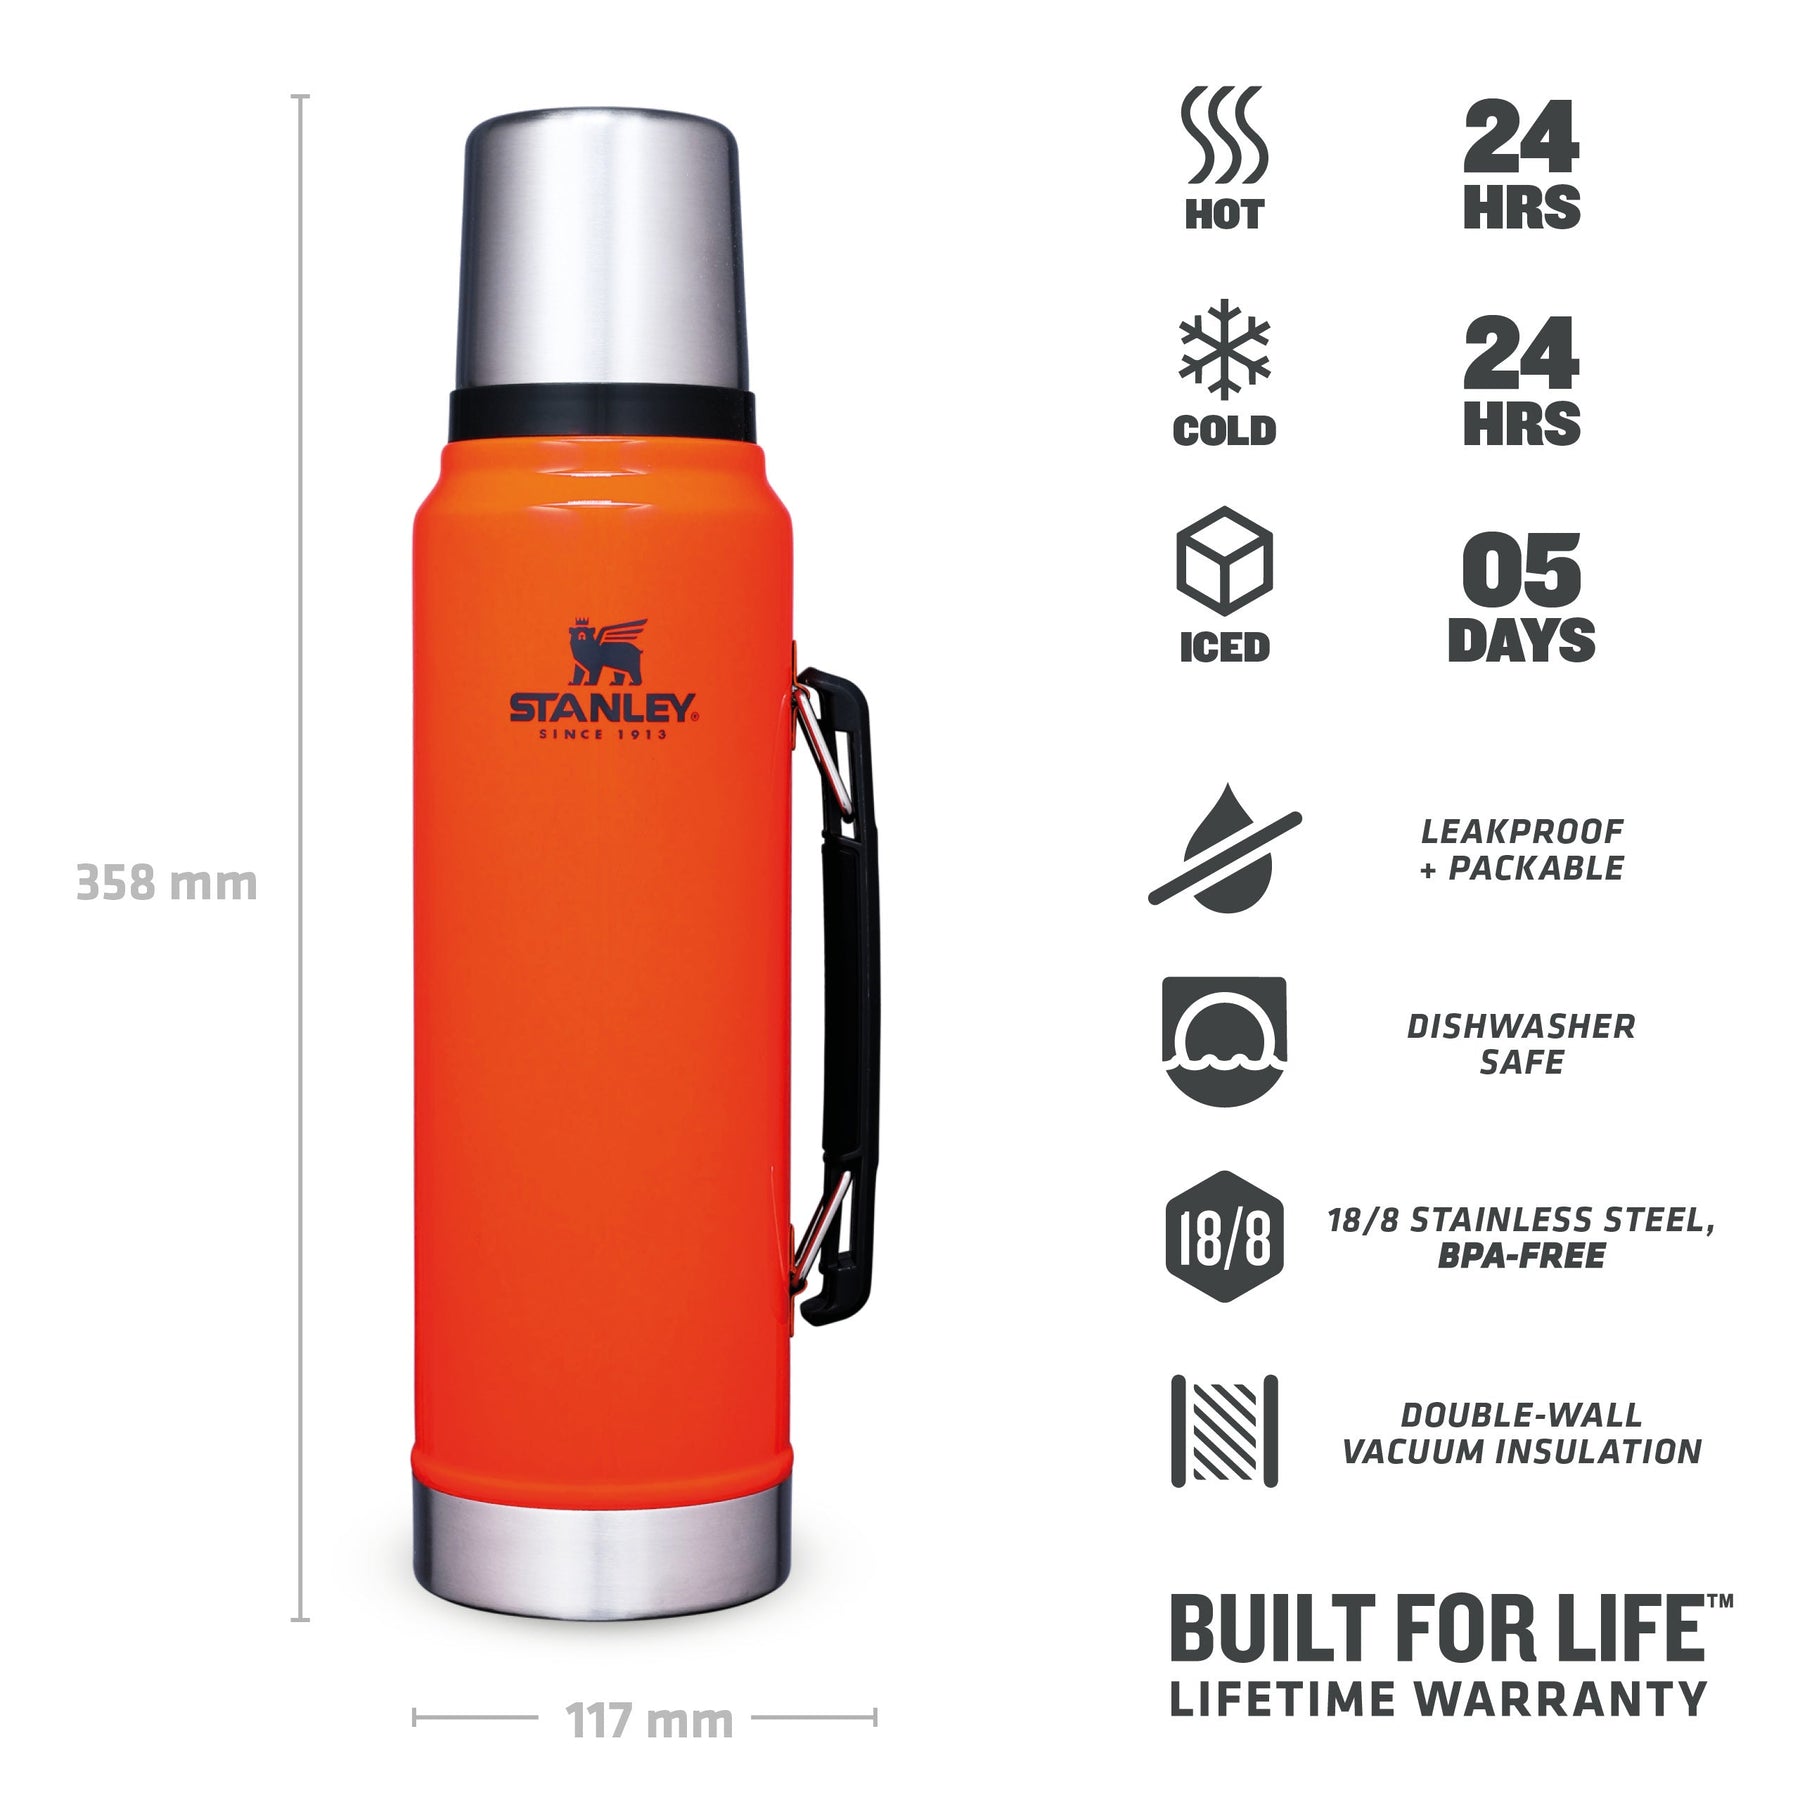 BLAZE Orange Stanley Classic Flask Great Gift For Hunters 